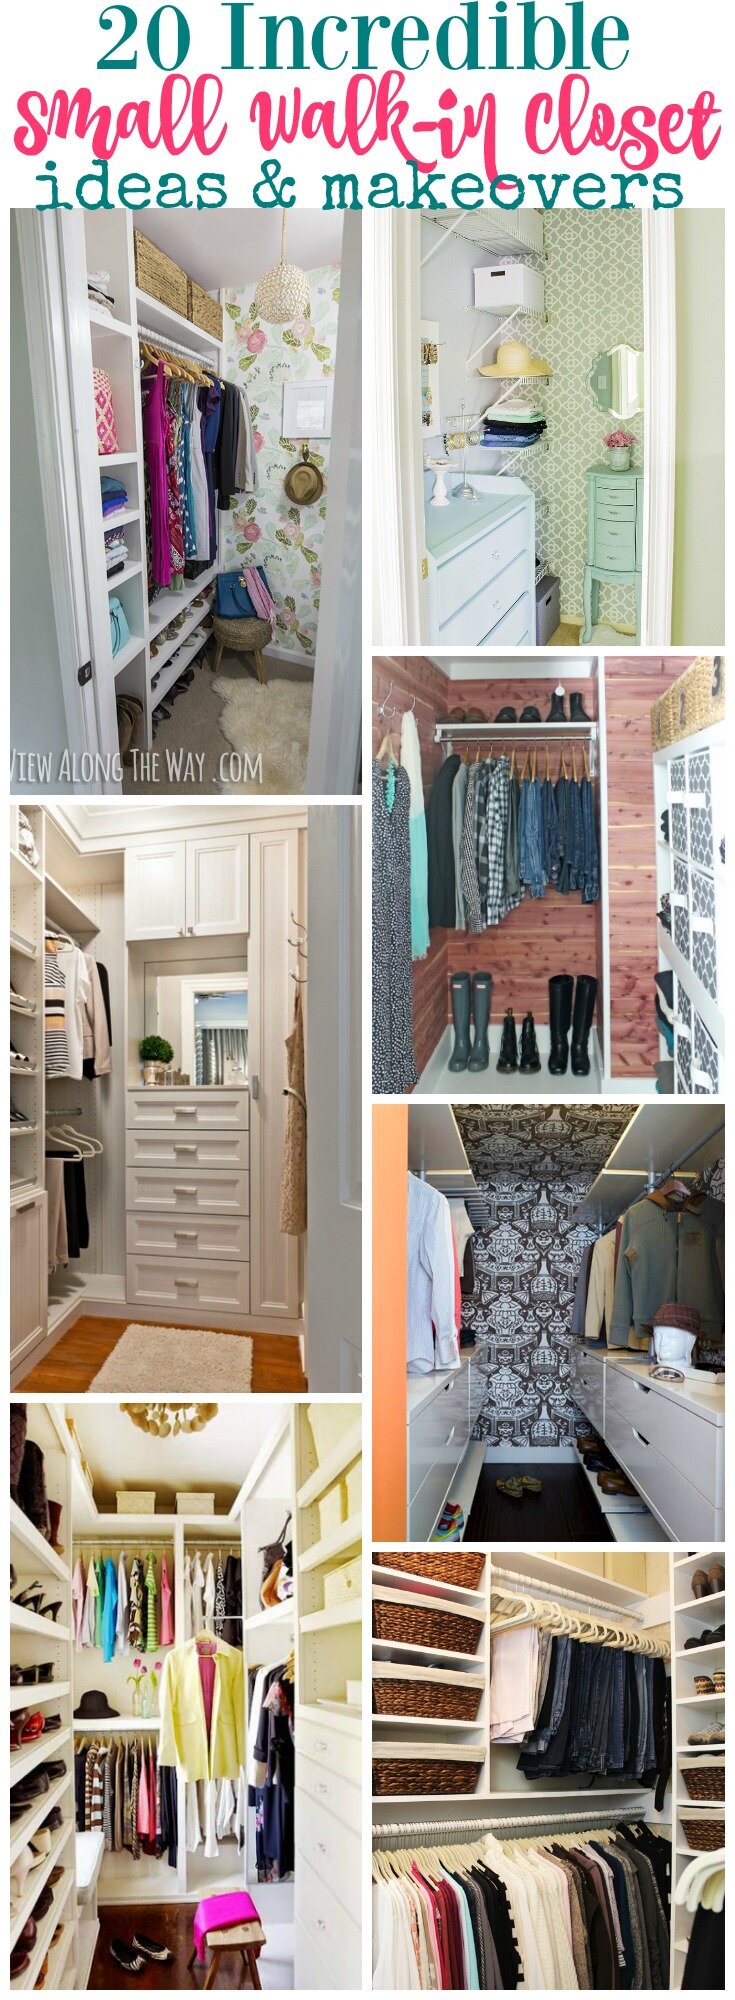 Inspiring Interior Storage Design Ideas with Diy Walk in Closet: Diy Walk In Closet | Diy Custom Closet Ideas | How To Make Your Own Closet Organizer